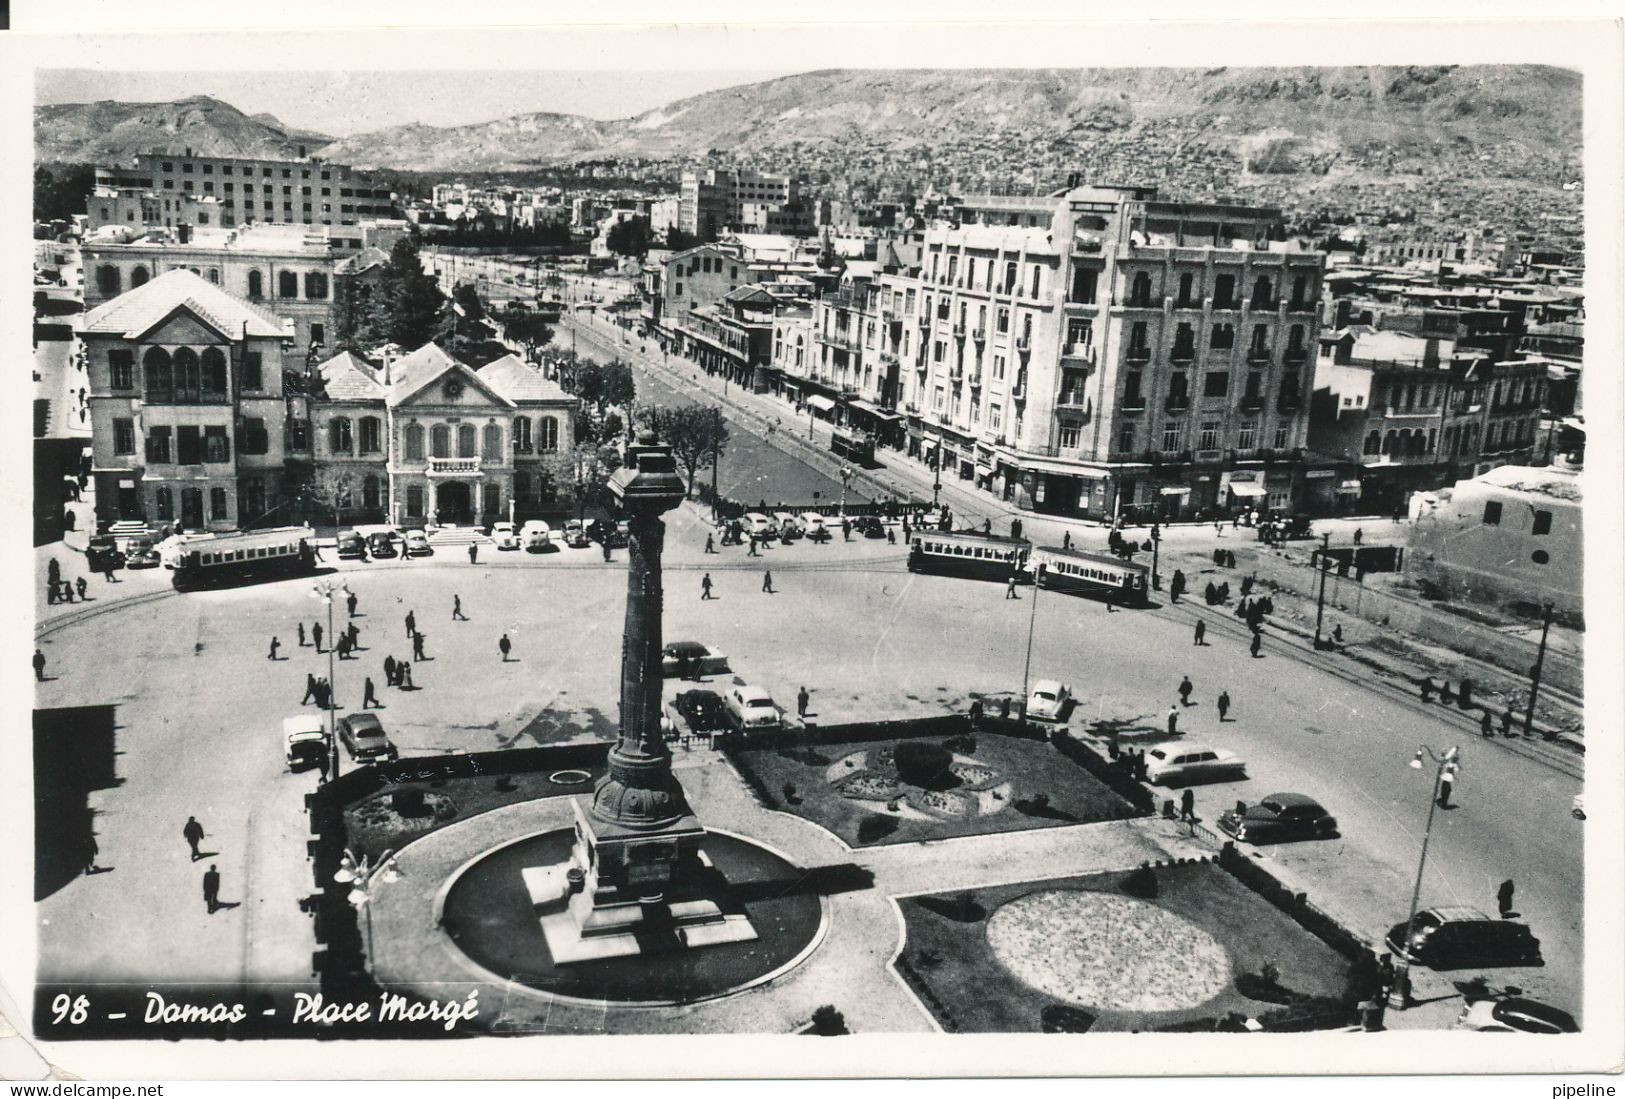 Syria Postcard Sent To Germany 23-6-1961 (Damascus Merje Square) - Syria